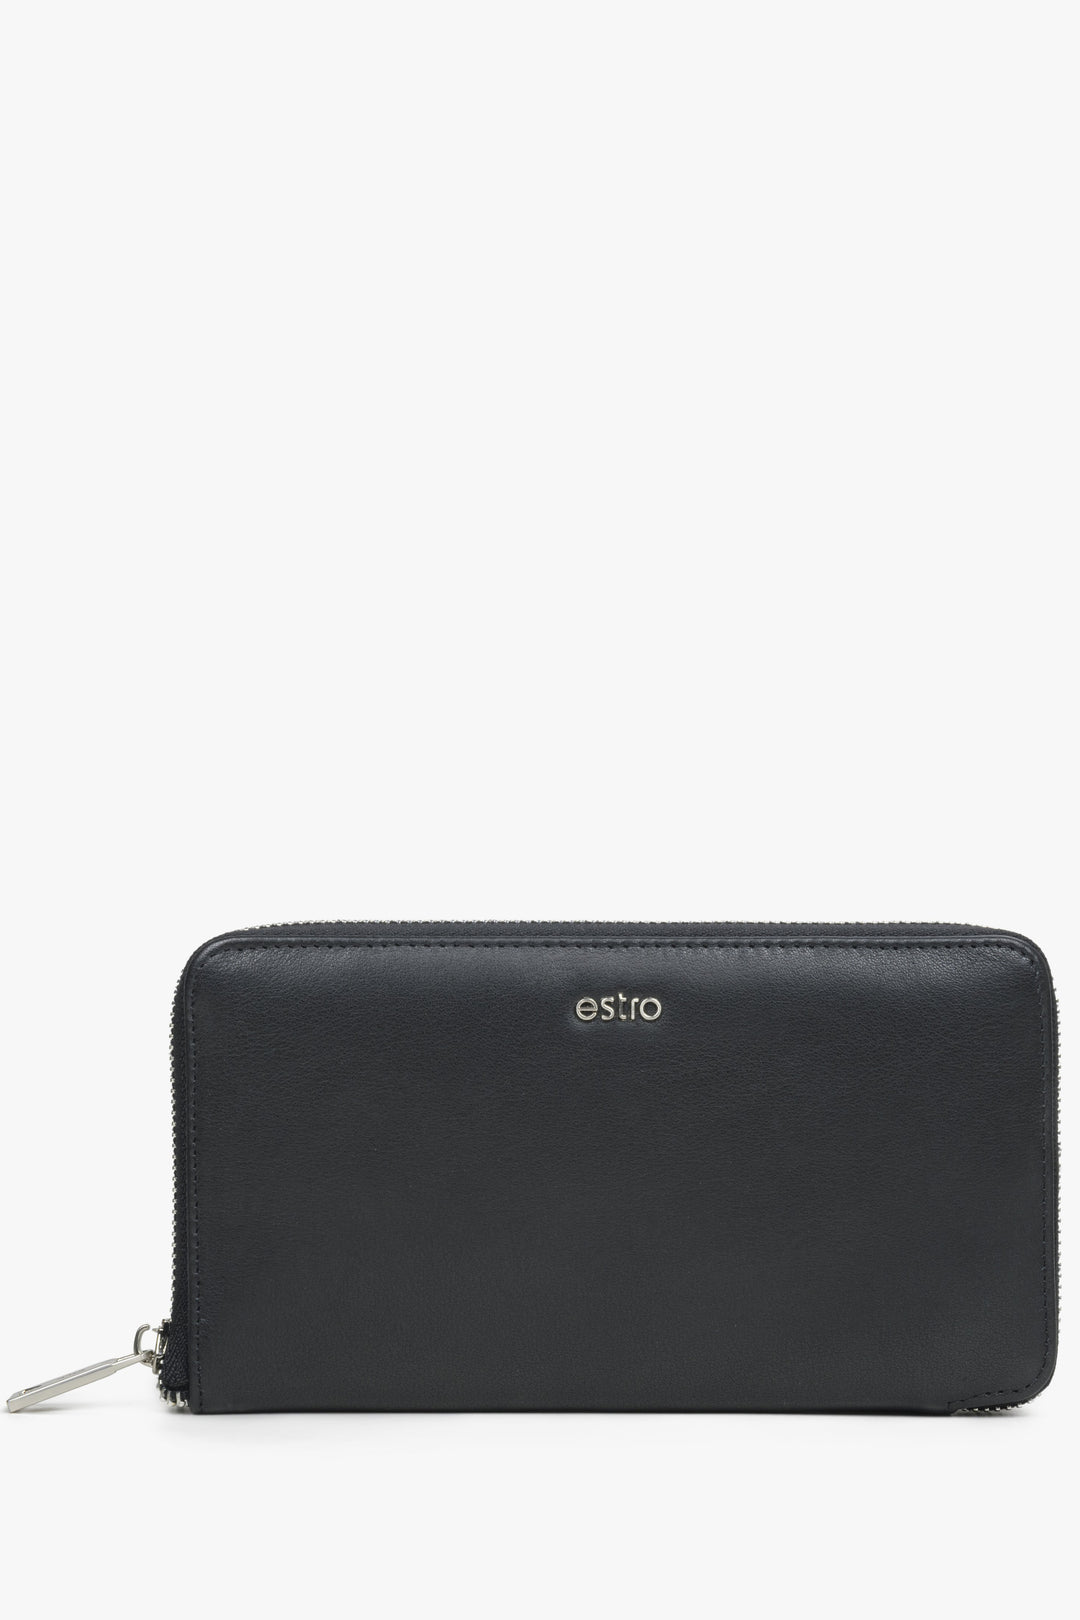 Men's Spacious Black Wallet made of Genuine Leather Estro ER00114489.